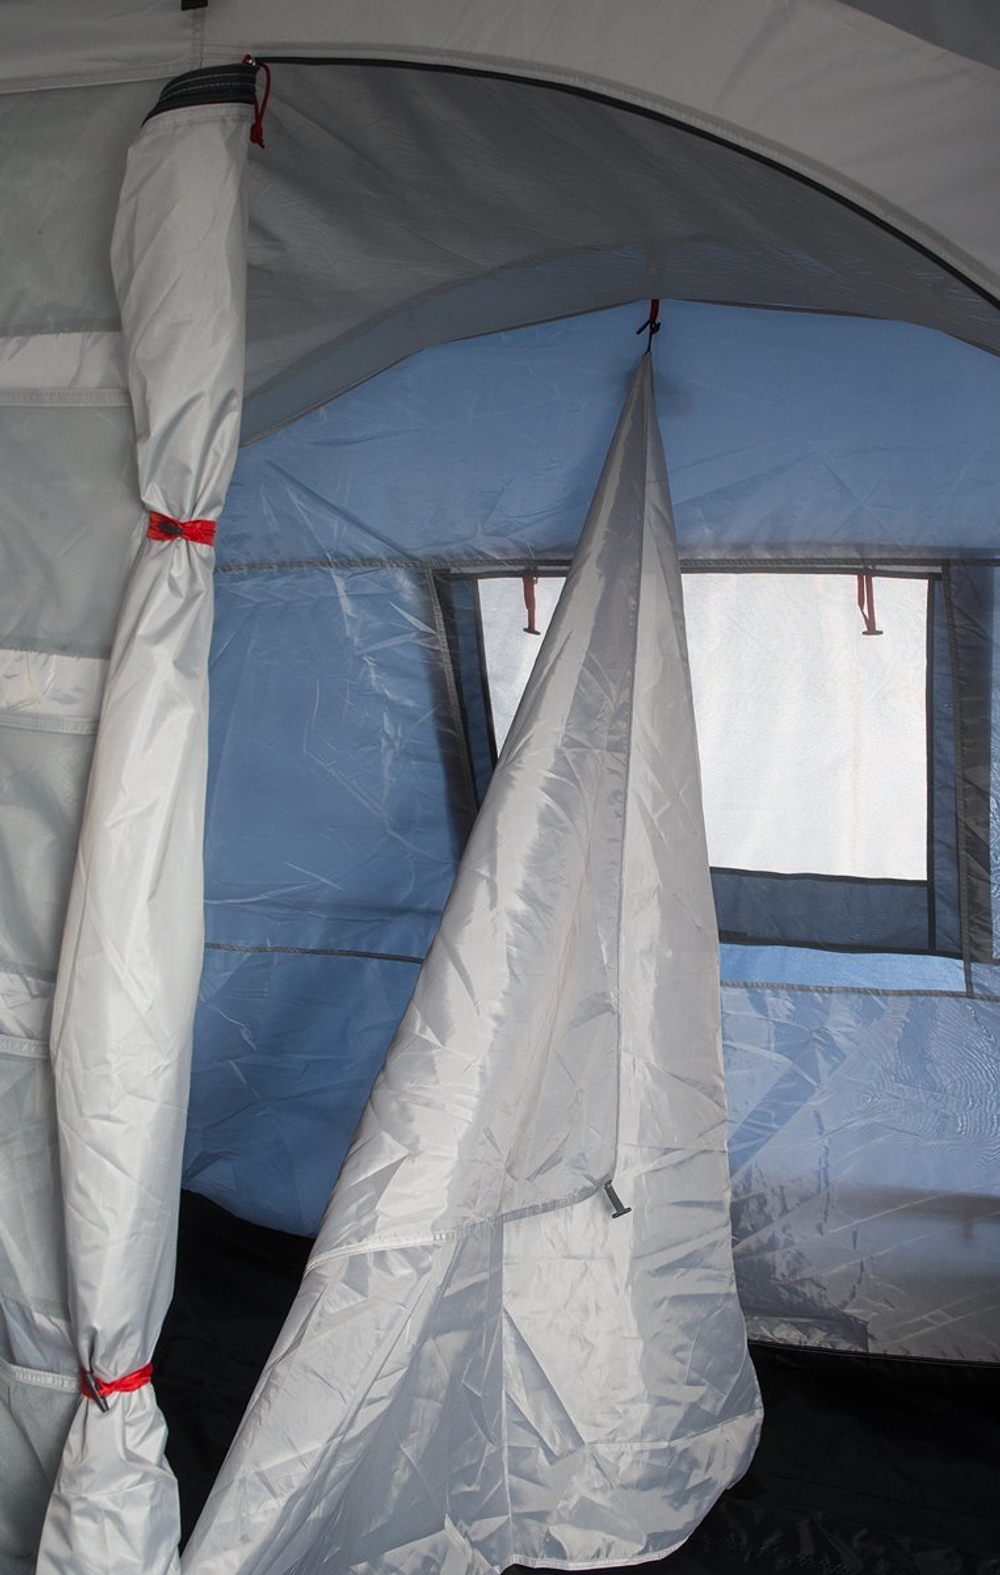 Большая двухкомнатная палатка FHM Group Libra 4 с высоким тамбуром